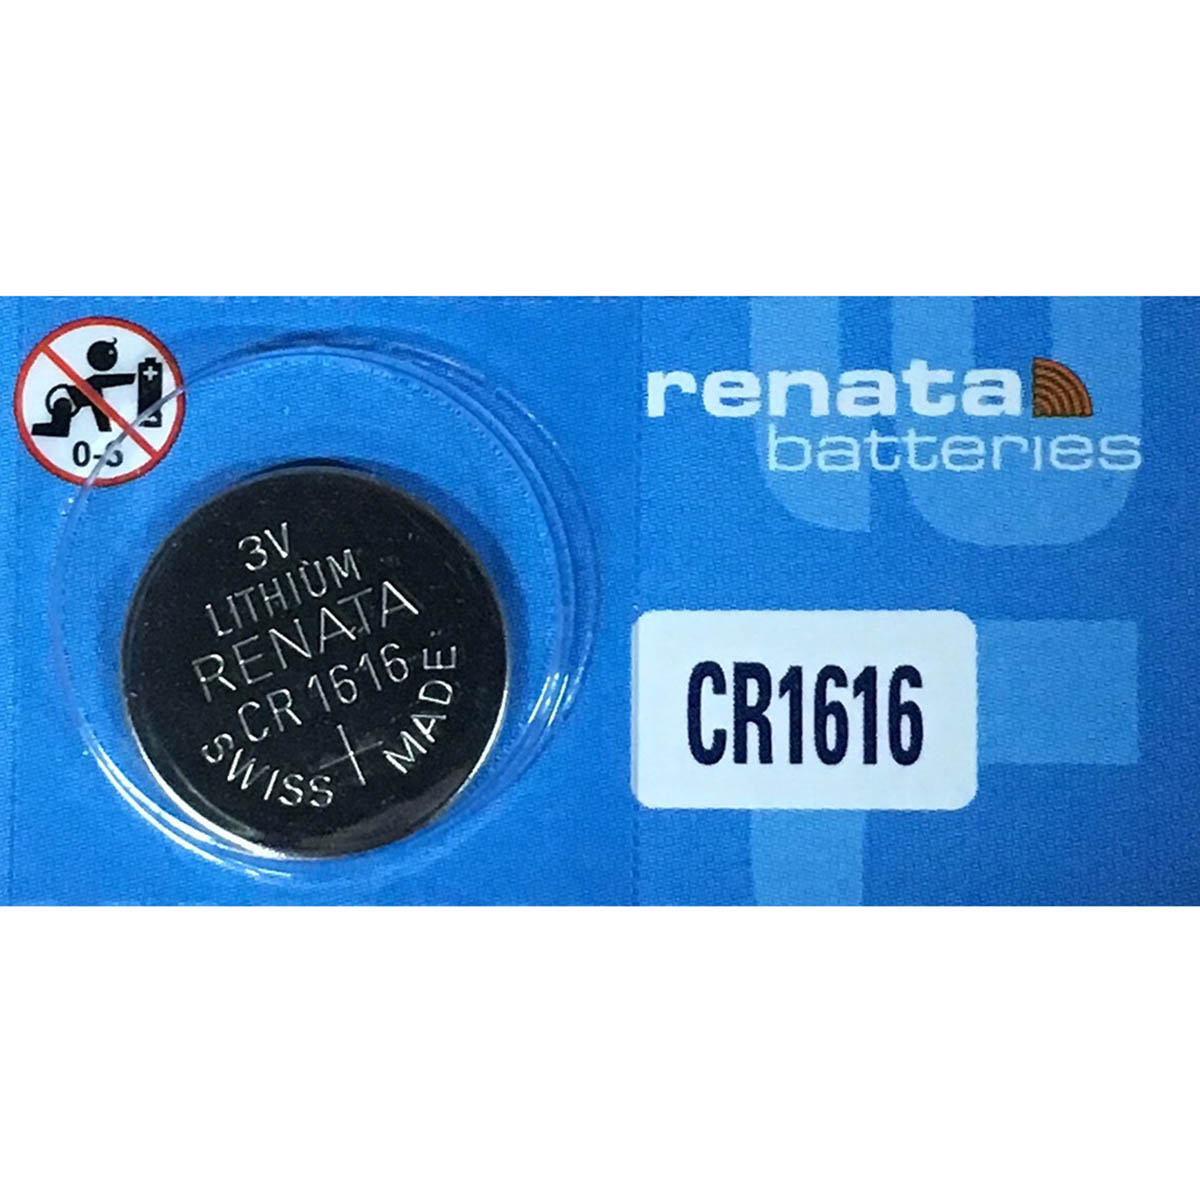 Renata CR2016 Battery 3V Lithium Coin Cell (1 pc.)